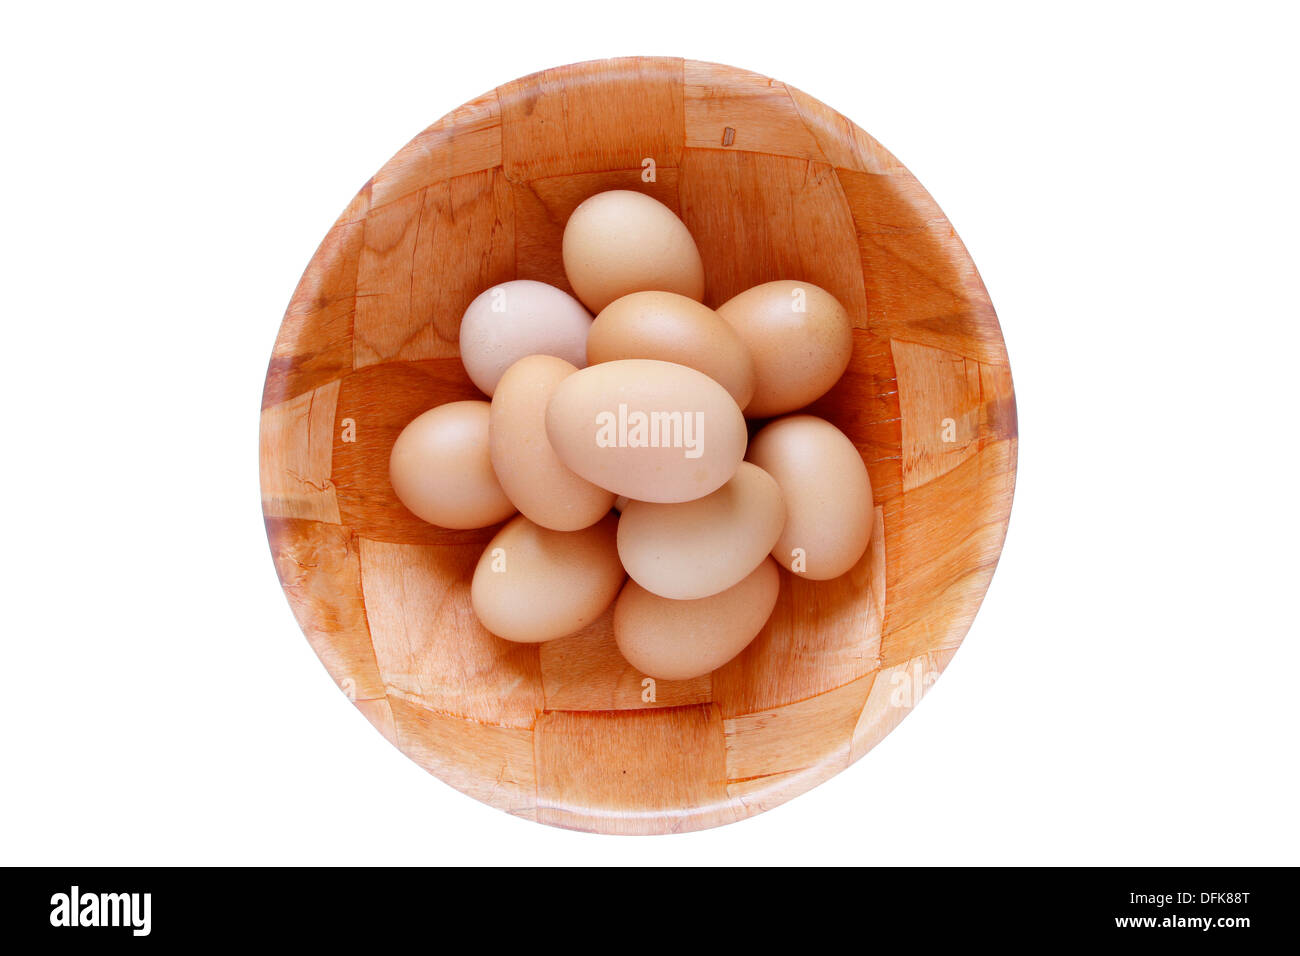 Bowl of eggs on plain white background Stock Photo